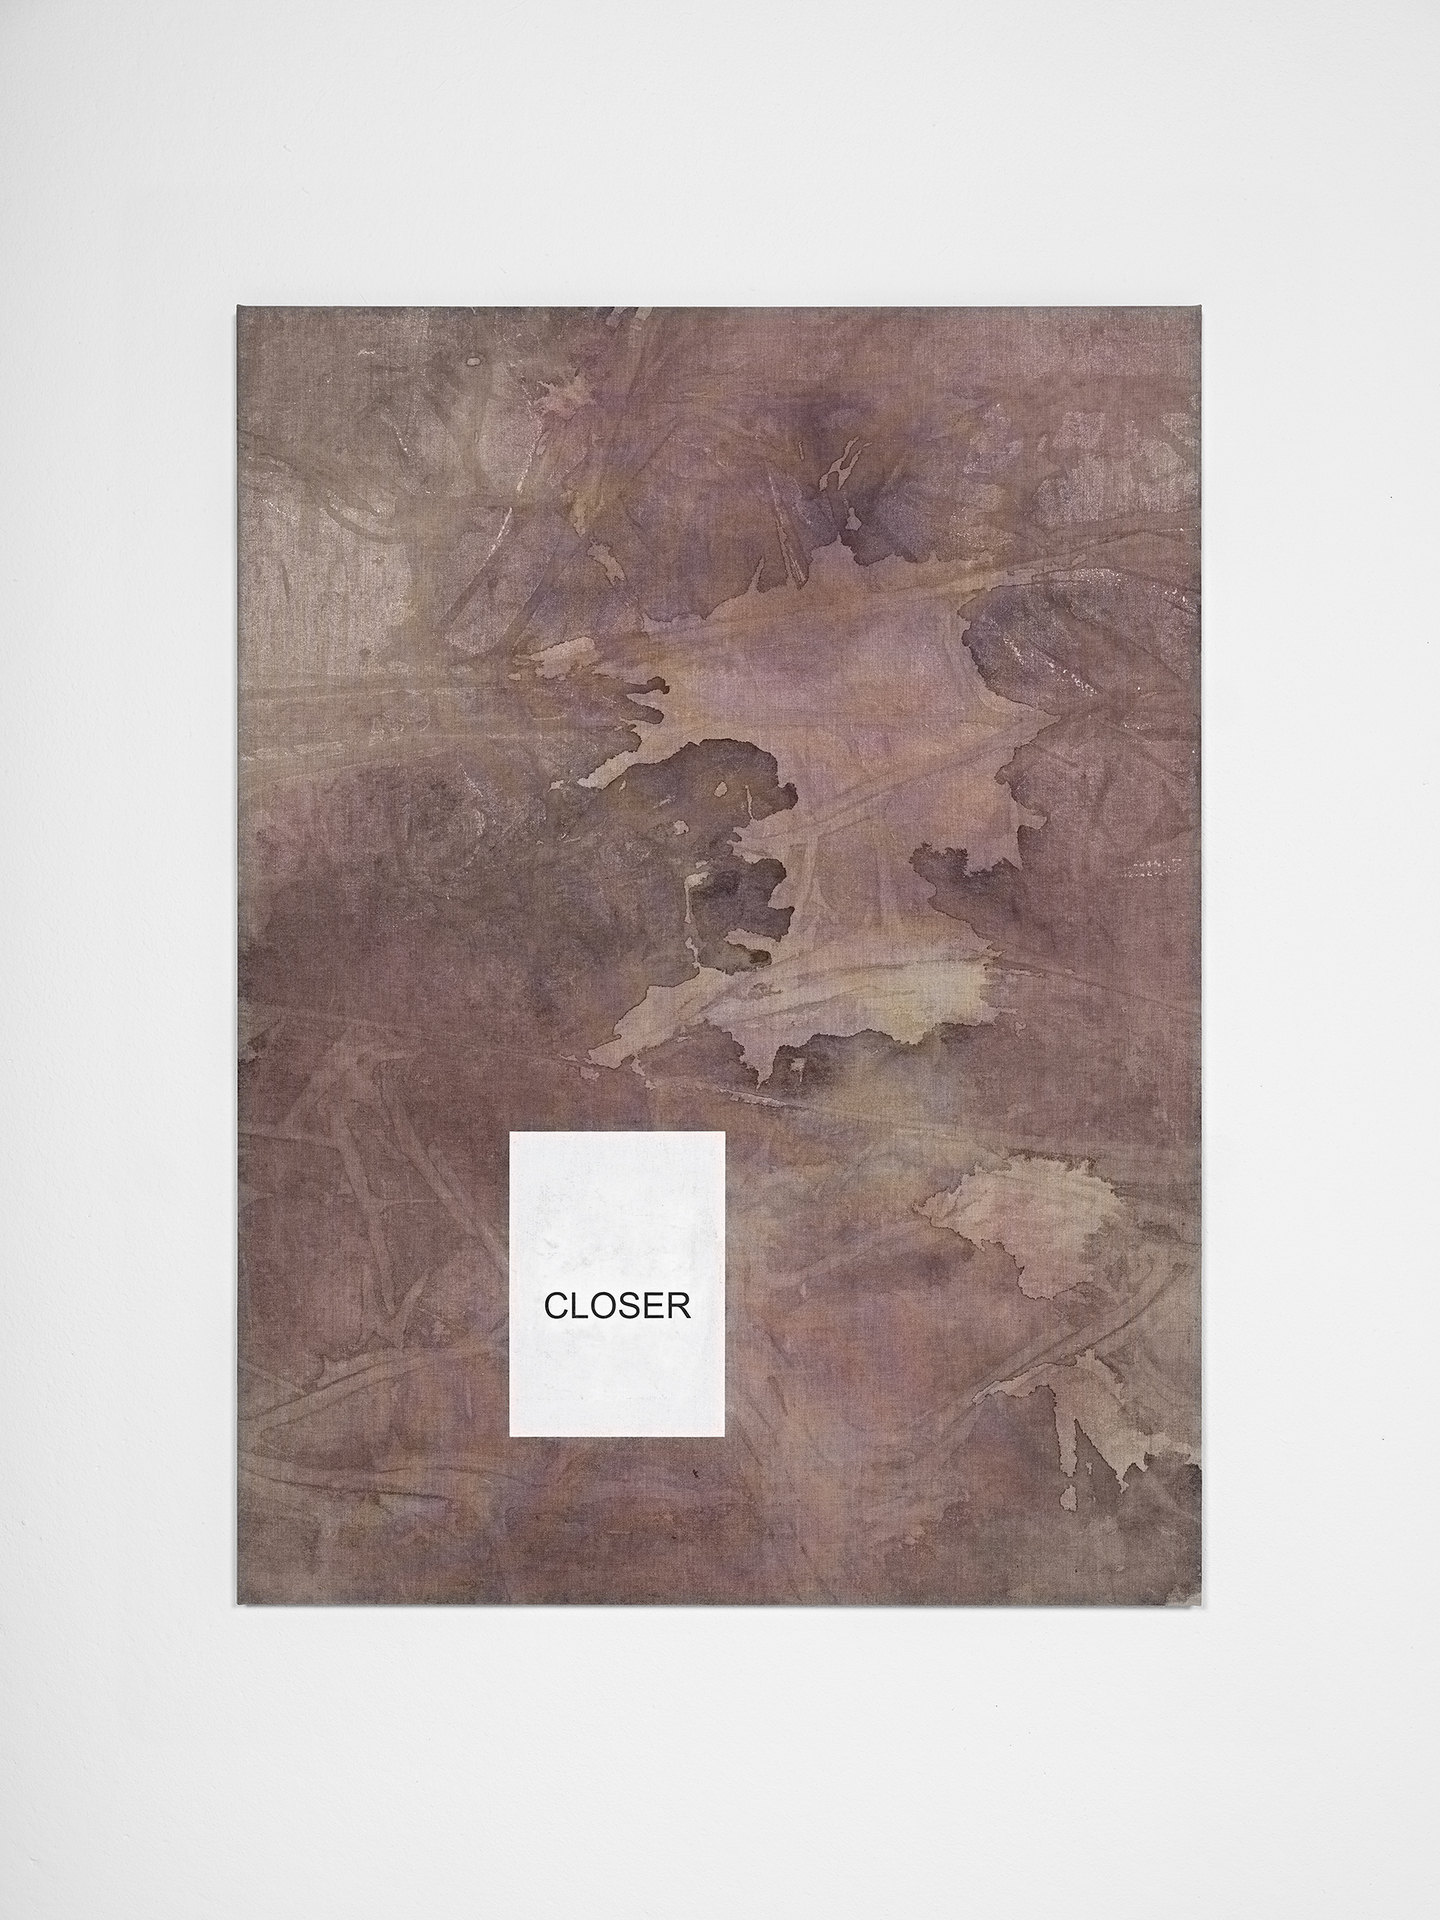 "Closer", 2020, acrylic on linen canvas, 126.5 × 94 cm